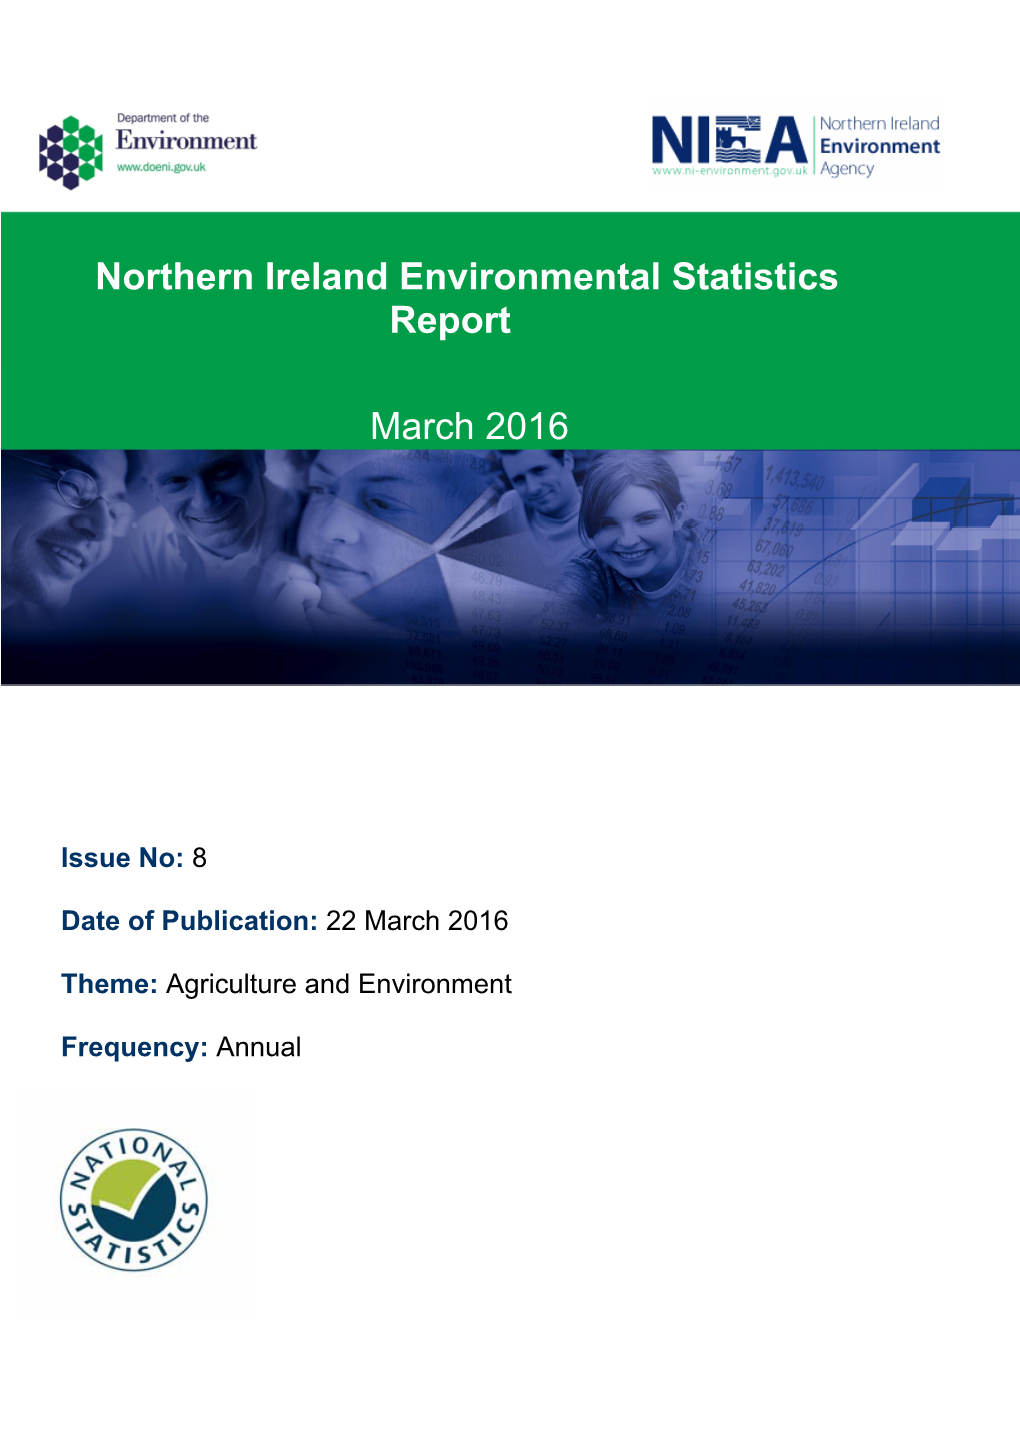 Northern Ireland Environmental Statistics Report 2016